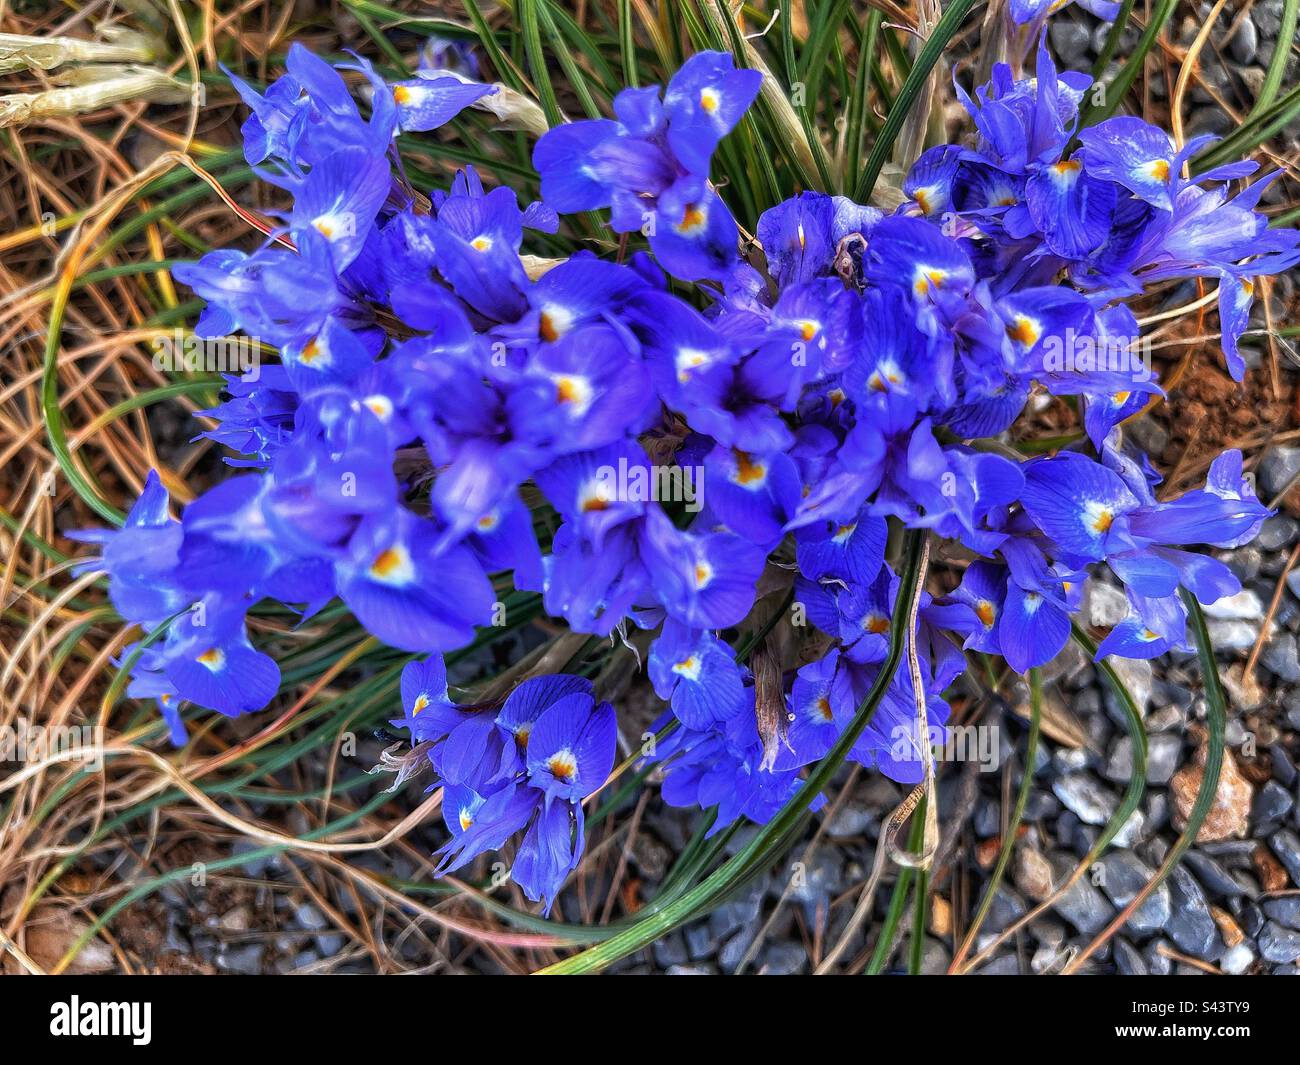 Barbary Nut or Moraea sisyrinchium is a small iris growing wild under a tree on a coastal path in Alcudia Stock Photo